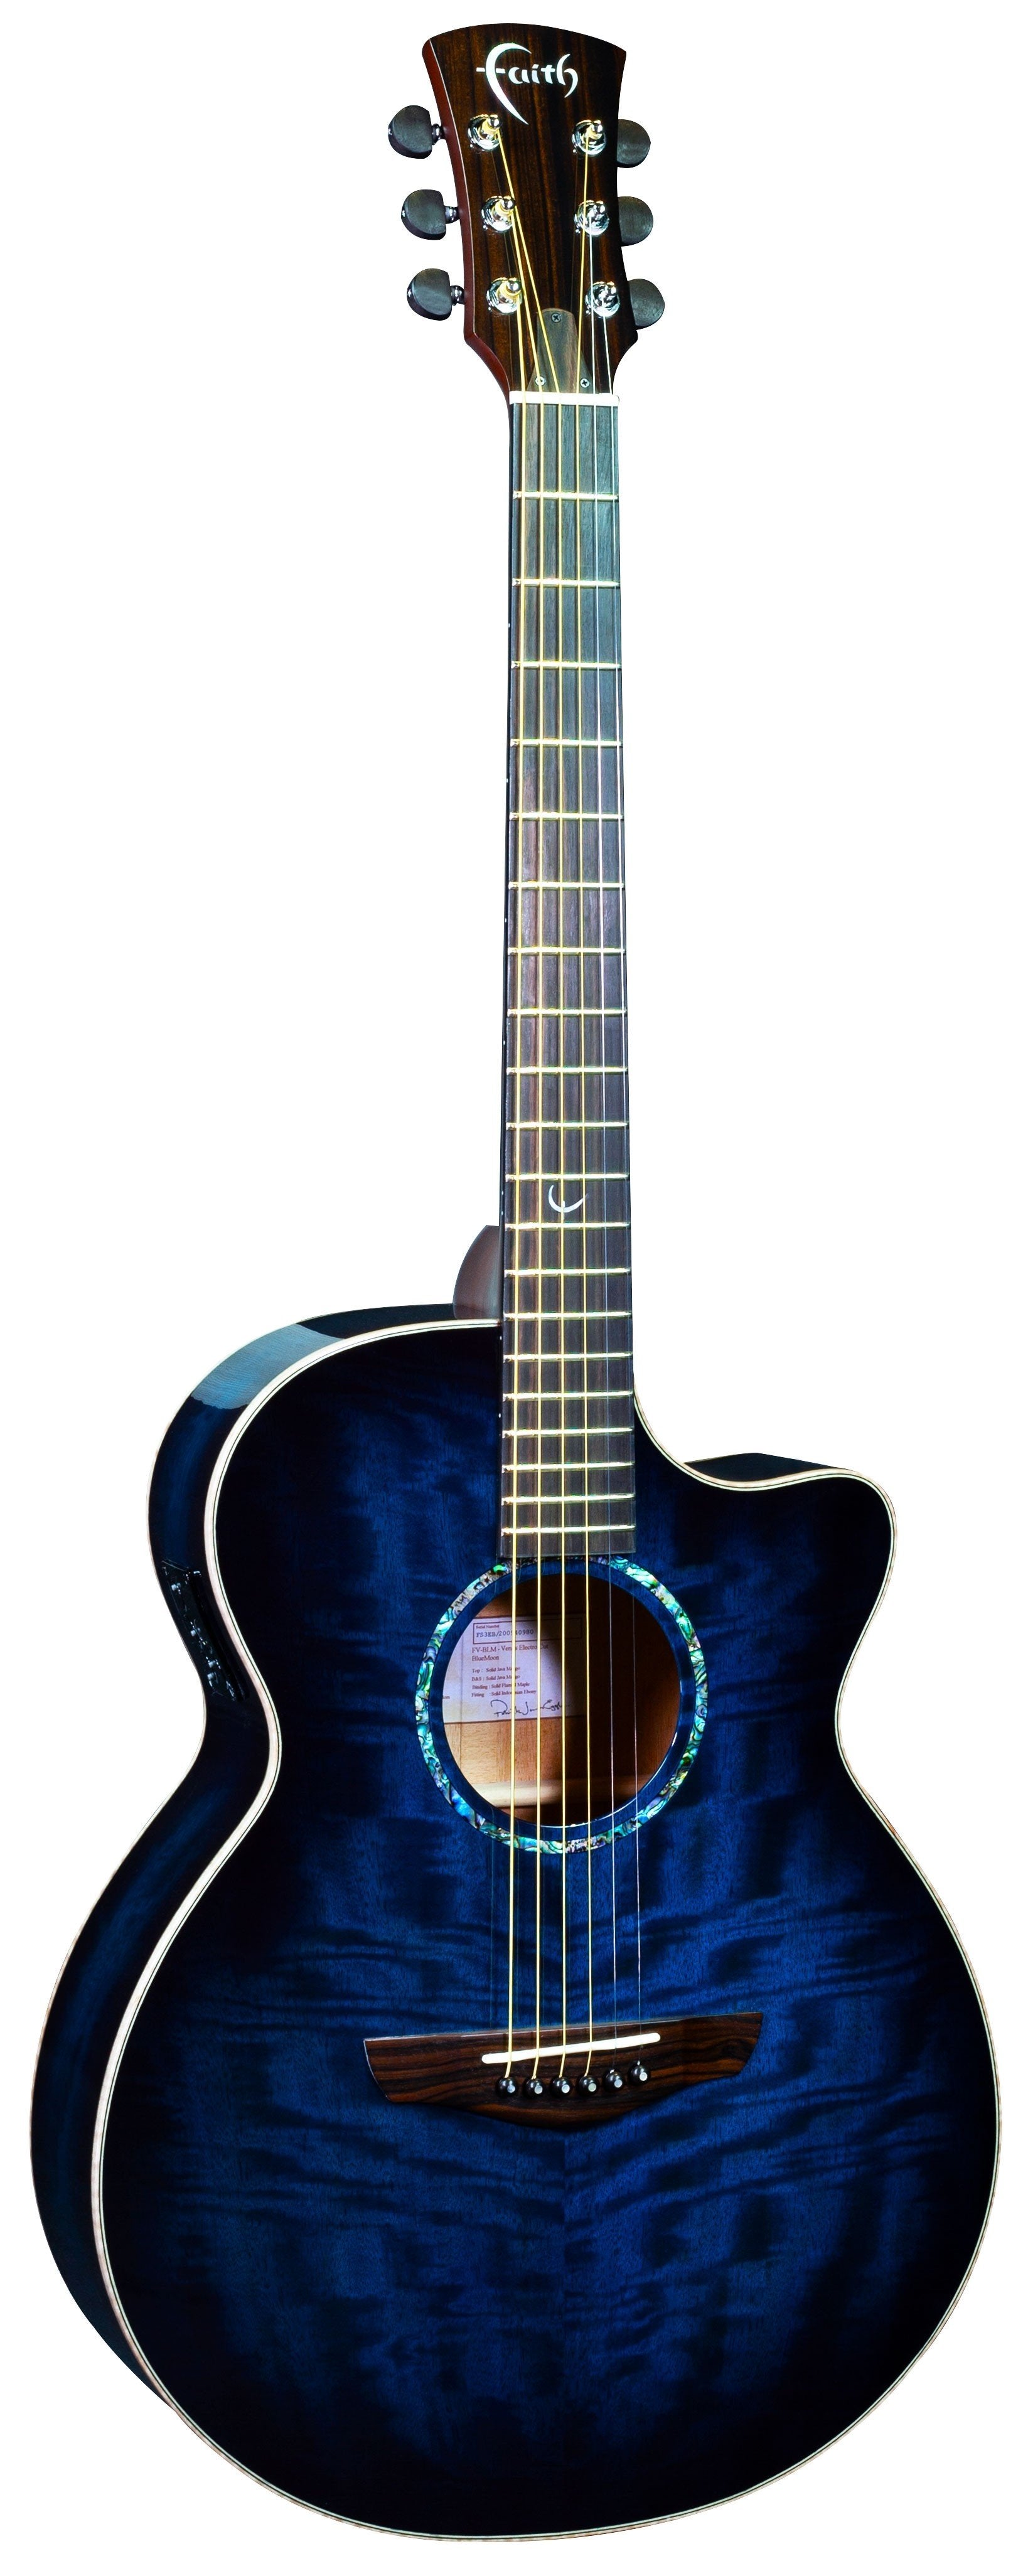 Faith FVBLML Left Handed Blue Moon Venus Electro Acoustic Guitar, Electro Acoustic Guitar for sale at Richards Guitars.